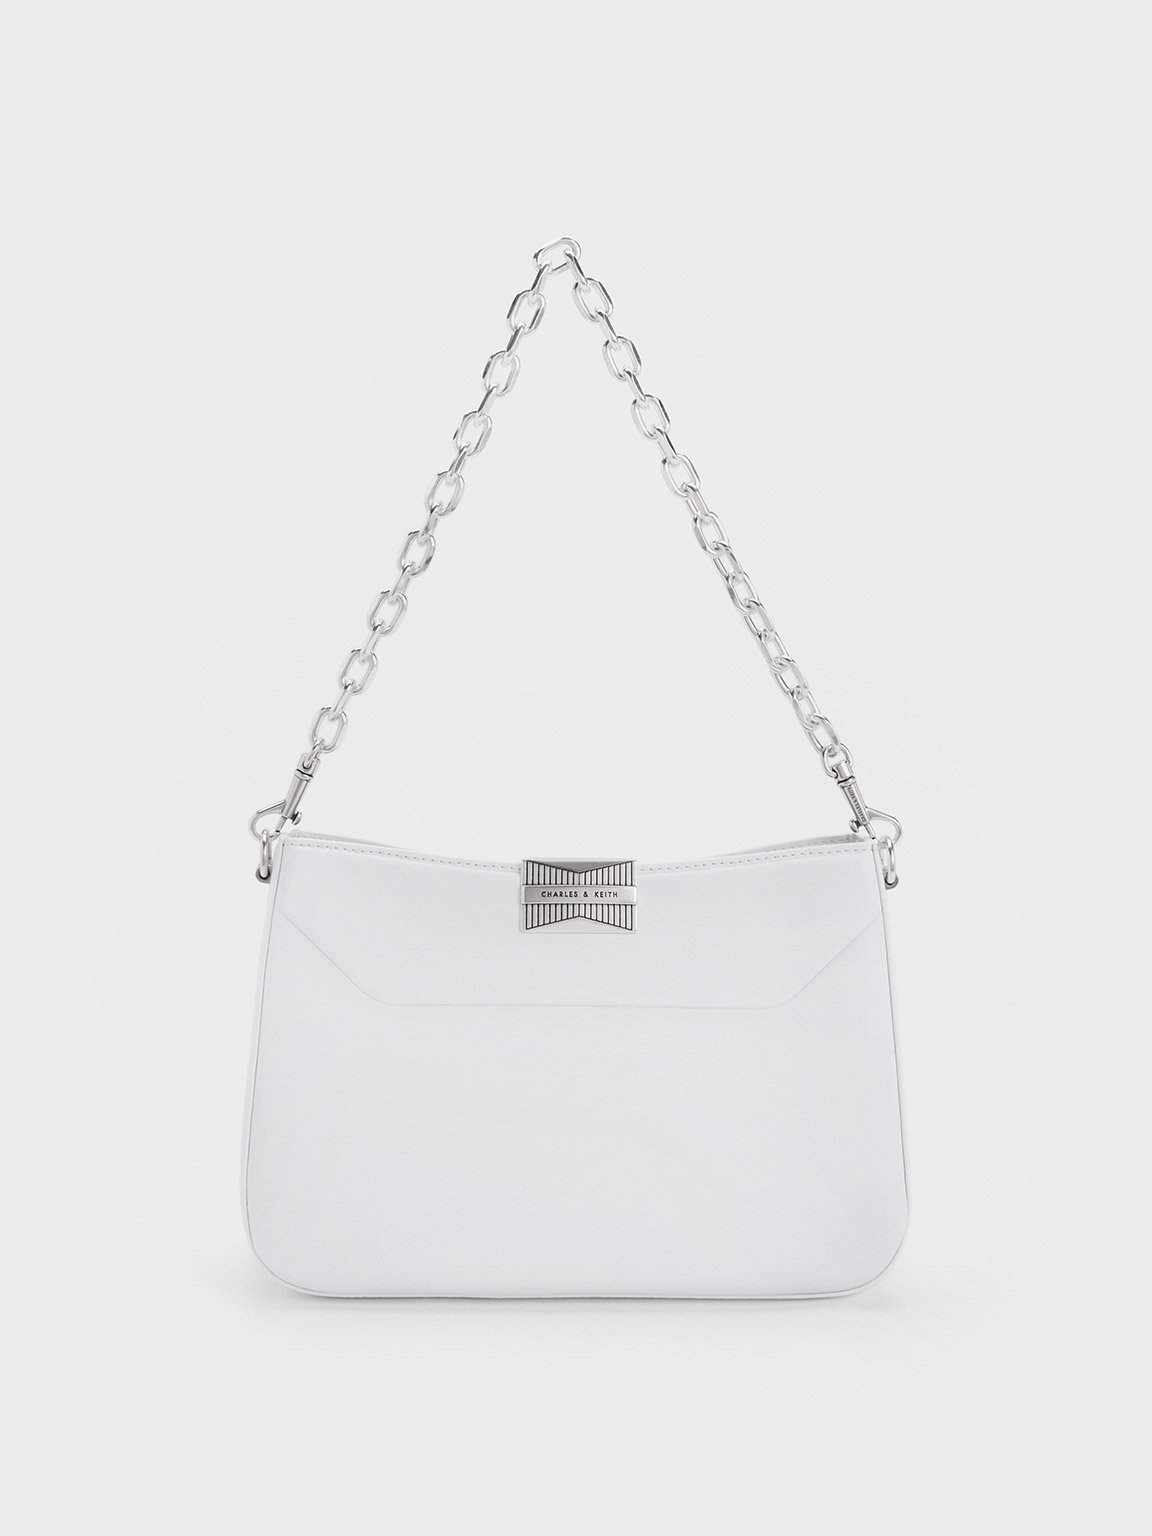 Designer Handbag Hire Australia | Designer Bag Hire